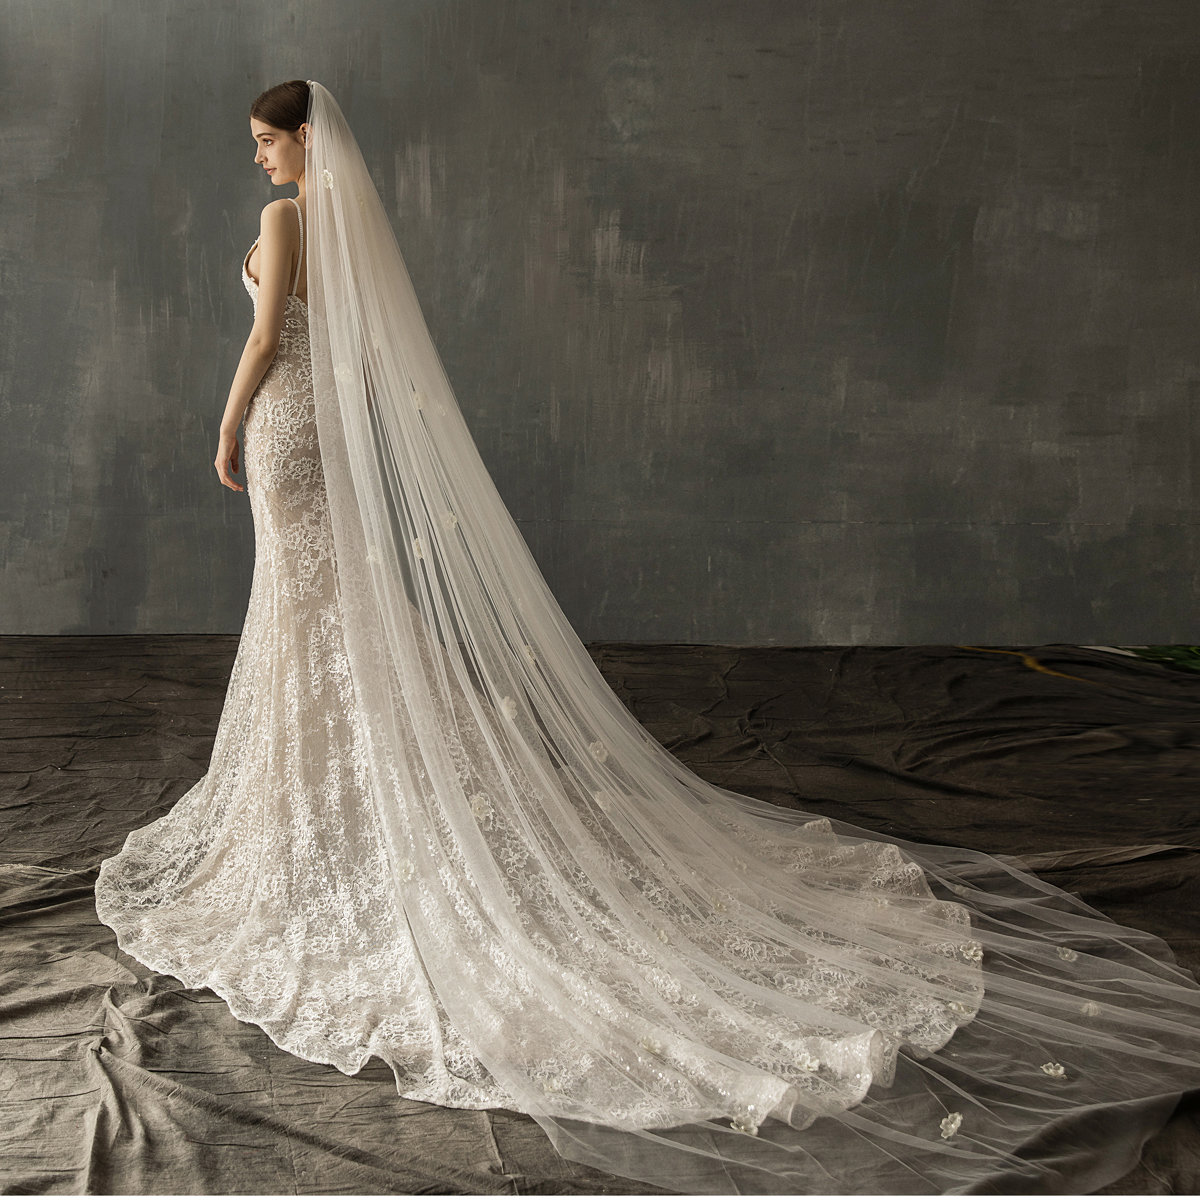 Bridal Long Tail Tulle Wedding Veil